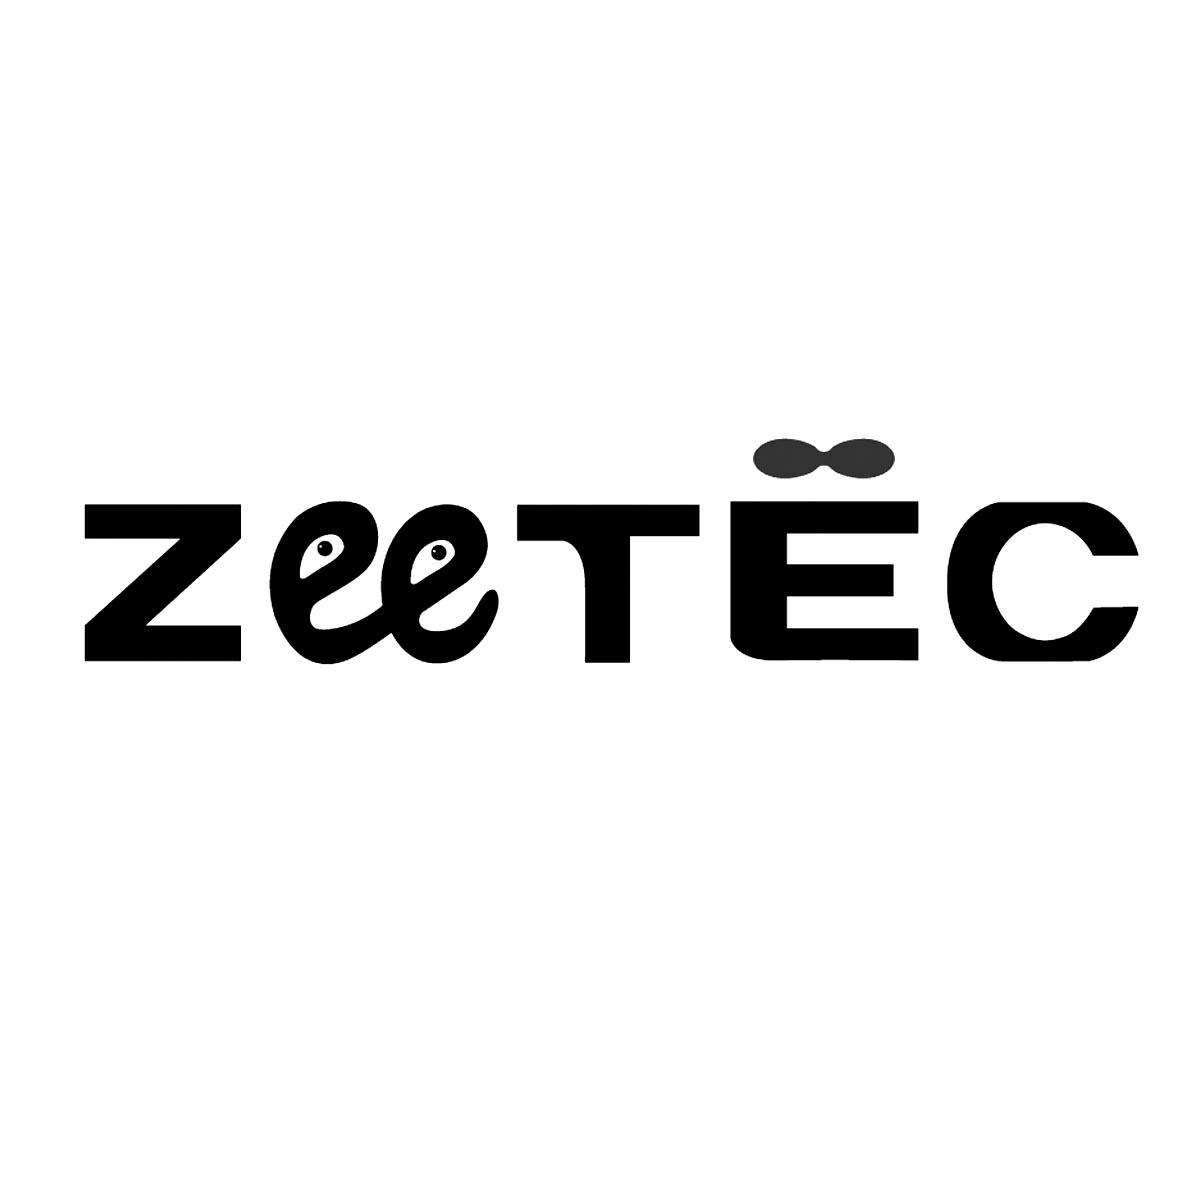 ZEETEC充气家具商标转让费用买卖交易流程